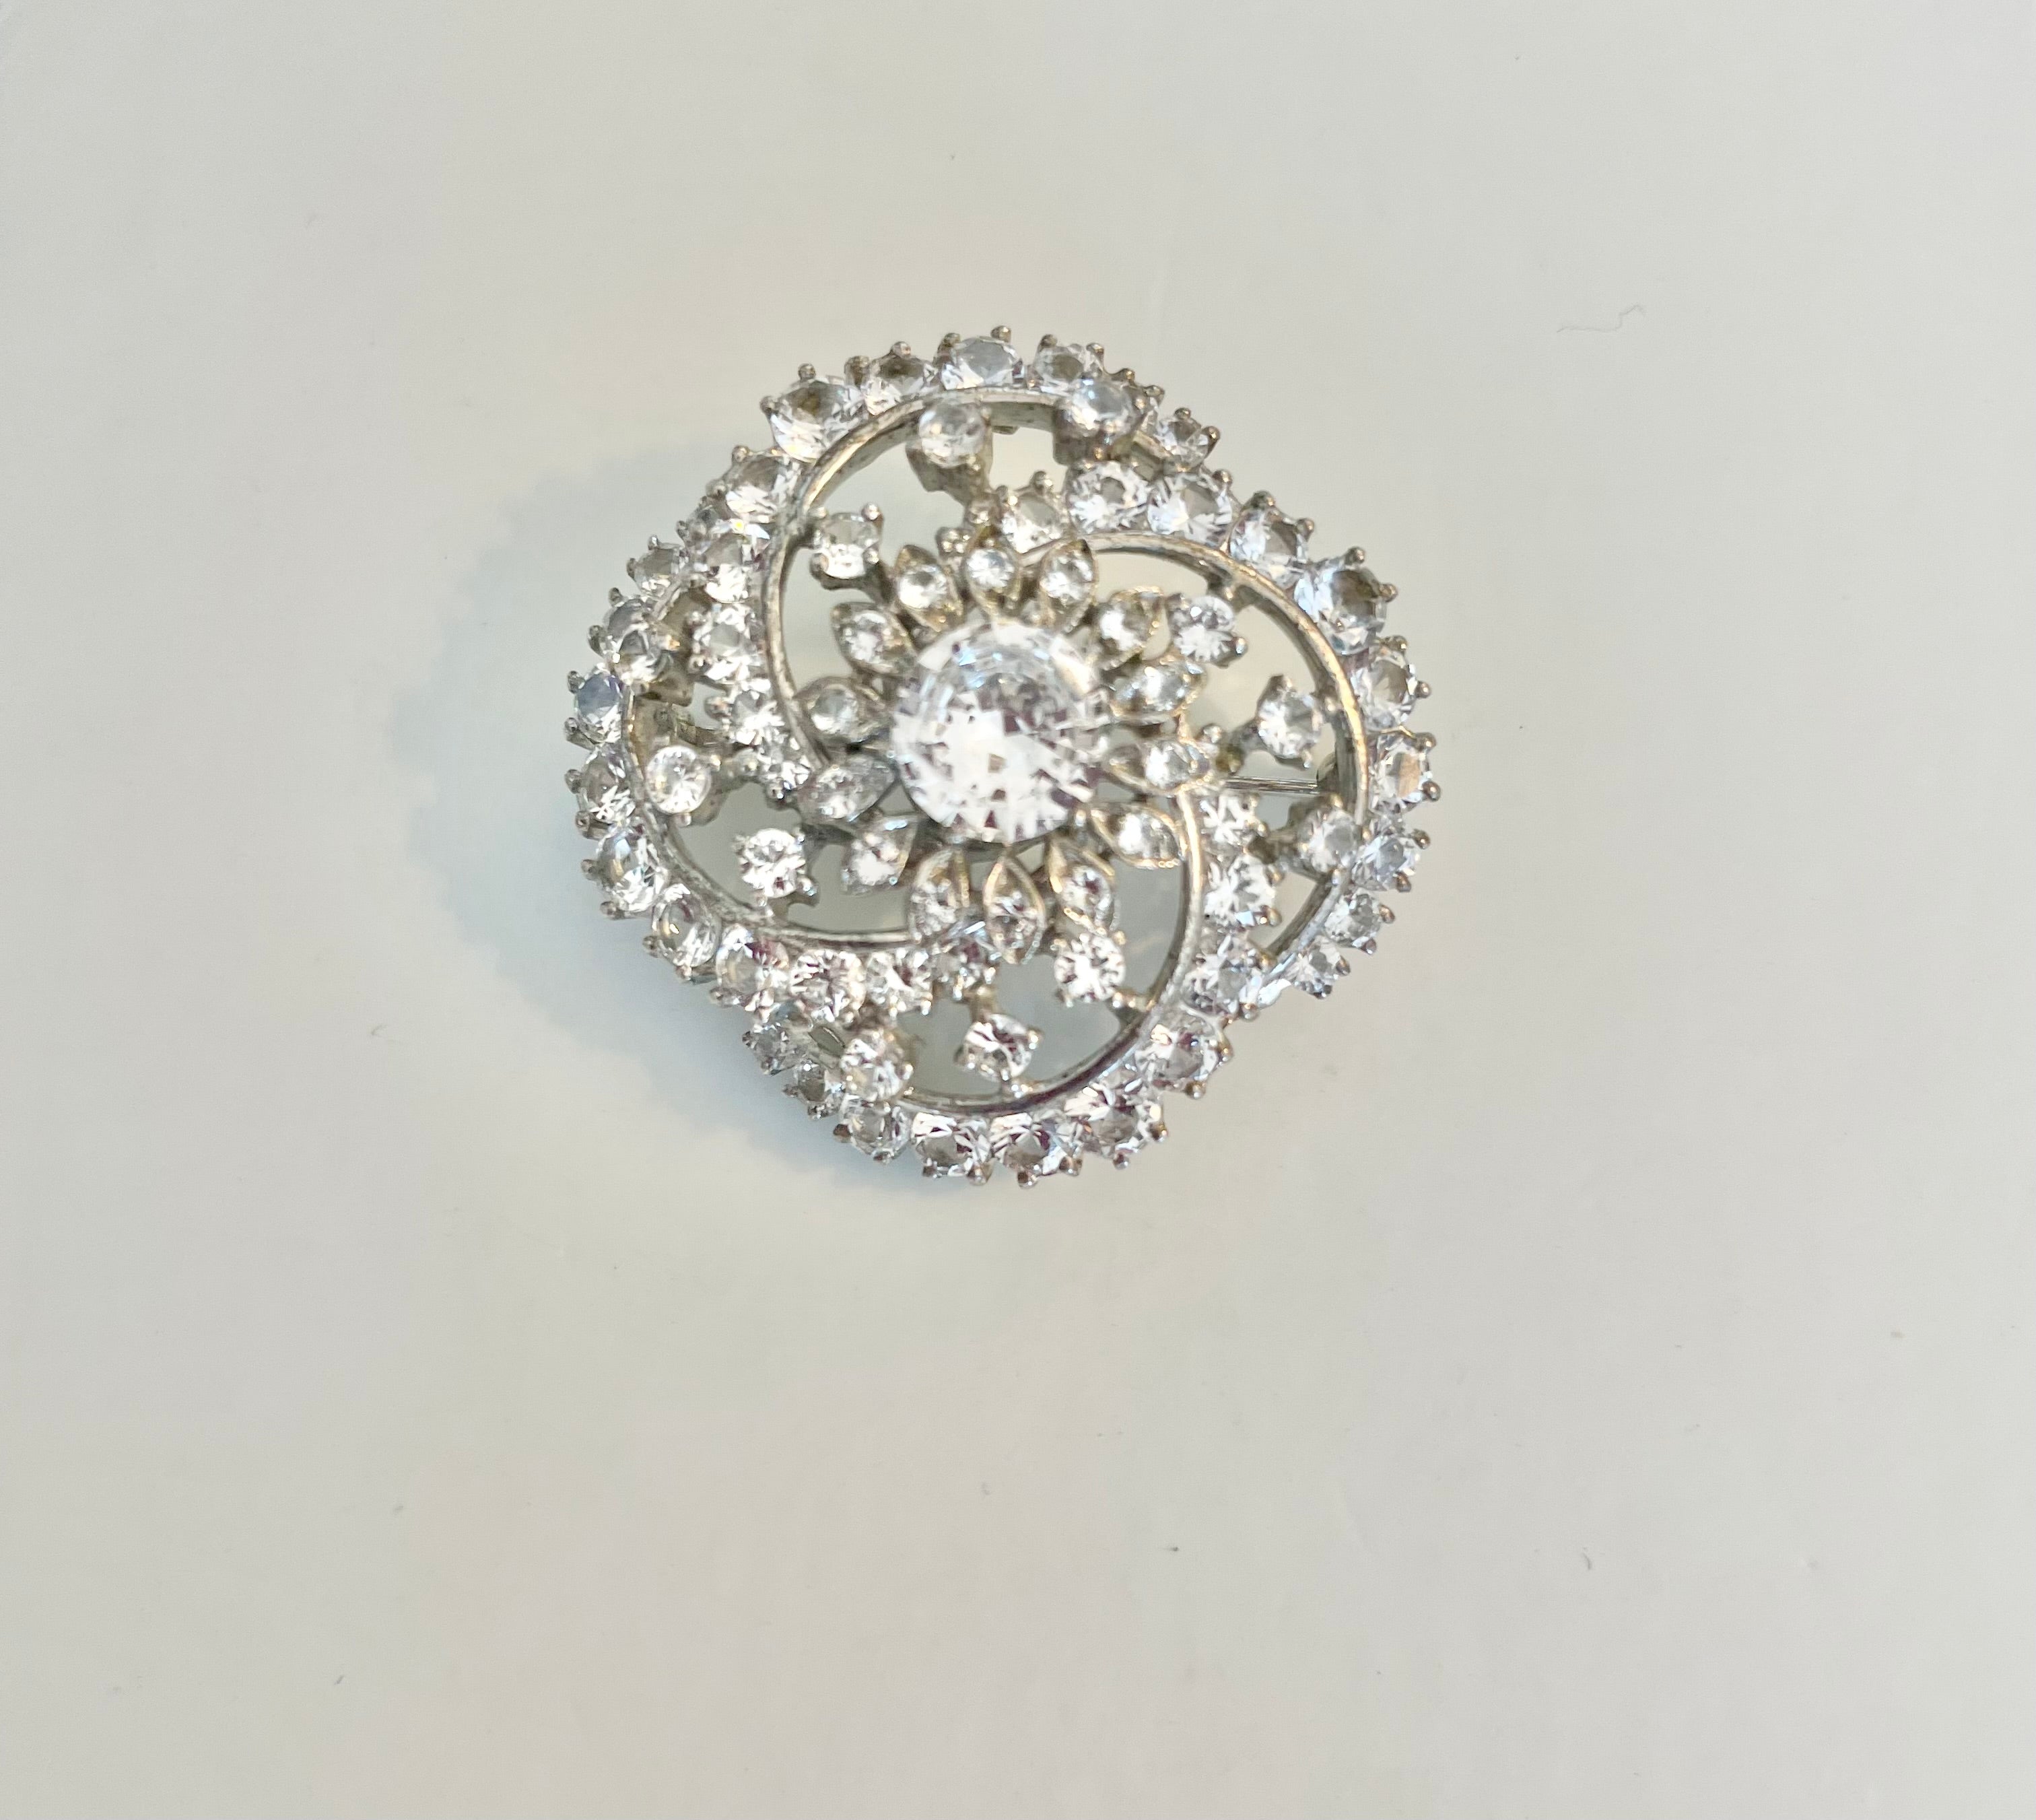 Vintage 1950's elegant glass brooch... look like fine jewelry